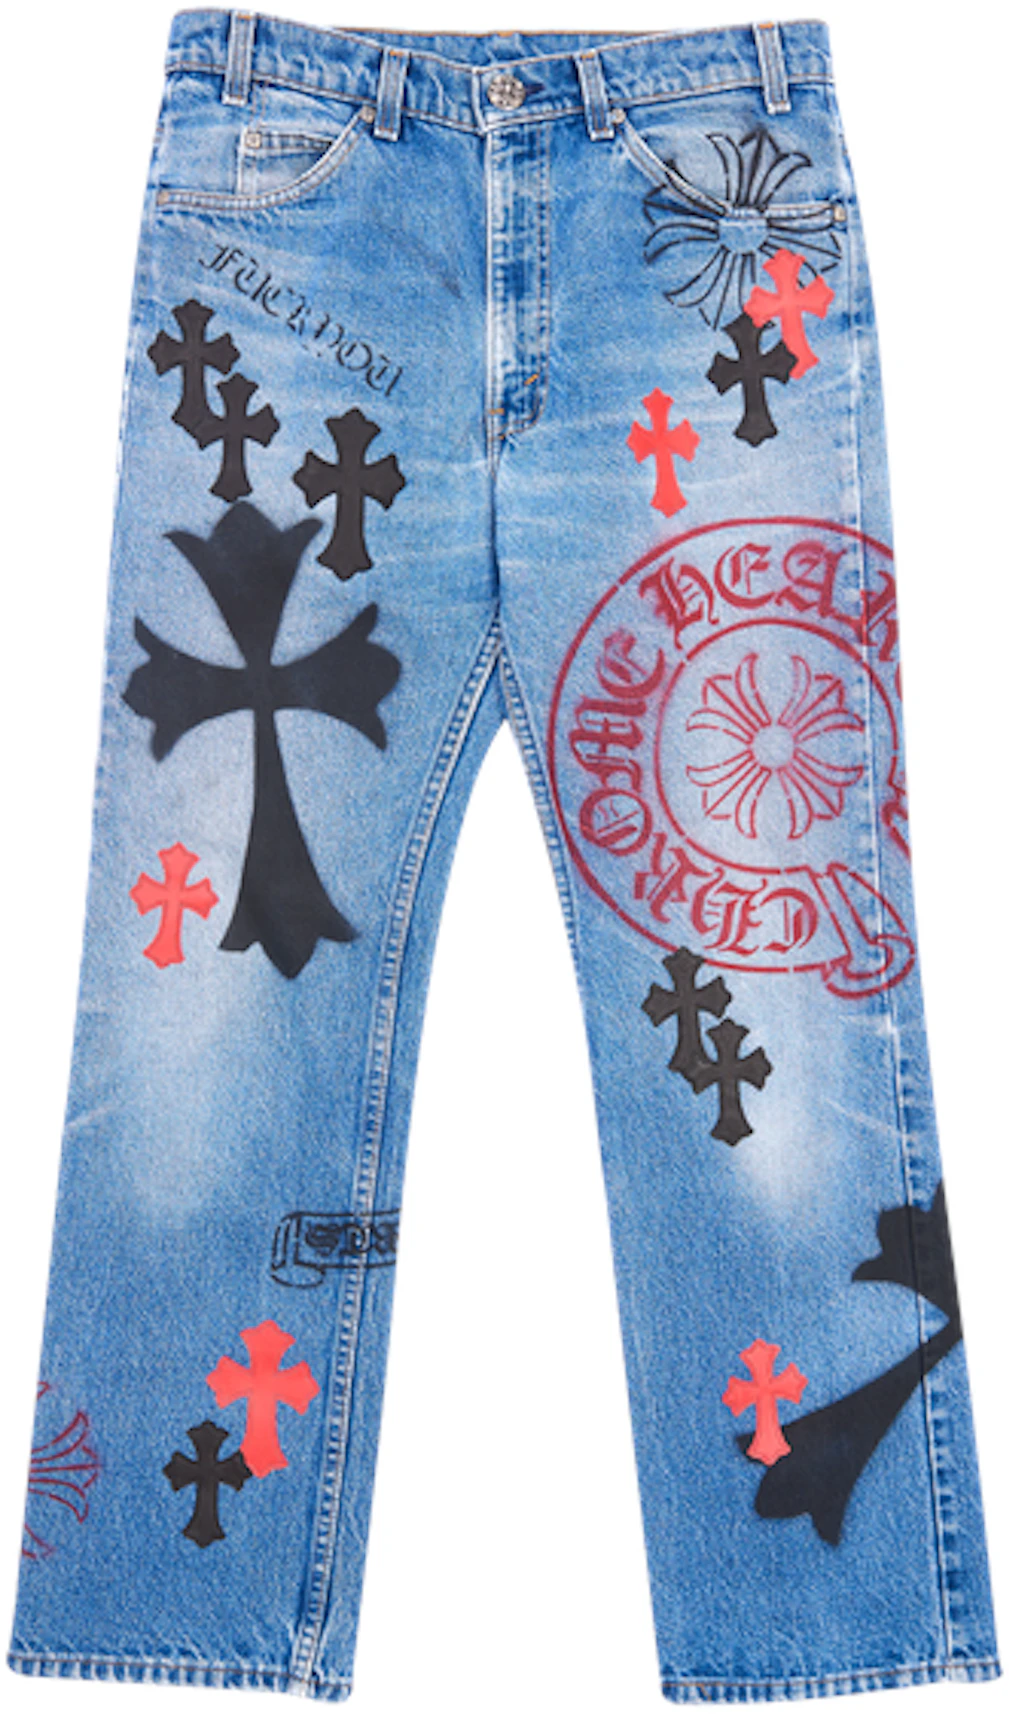 Chrome Hearts Cross Levi jeans 